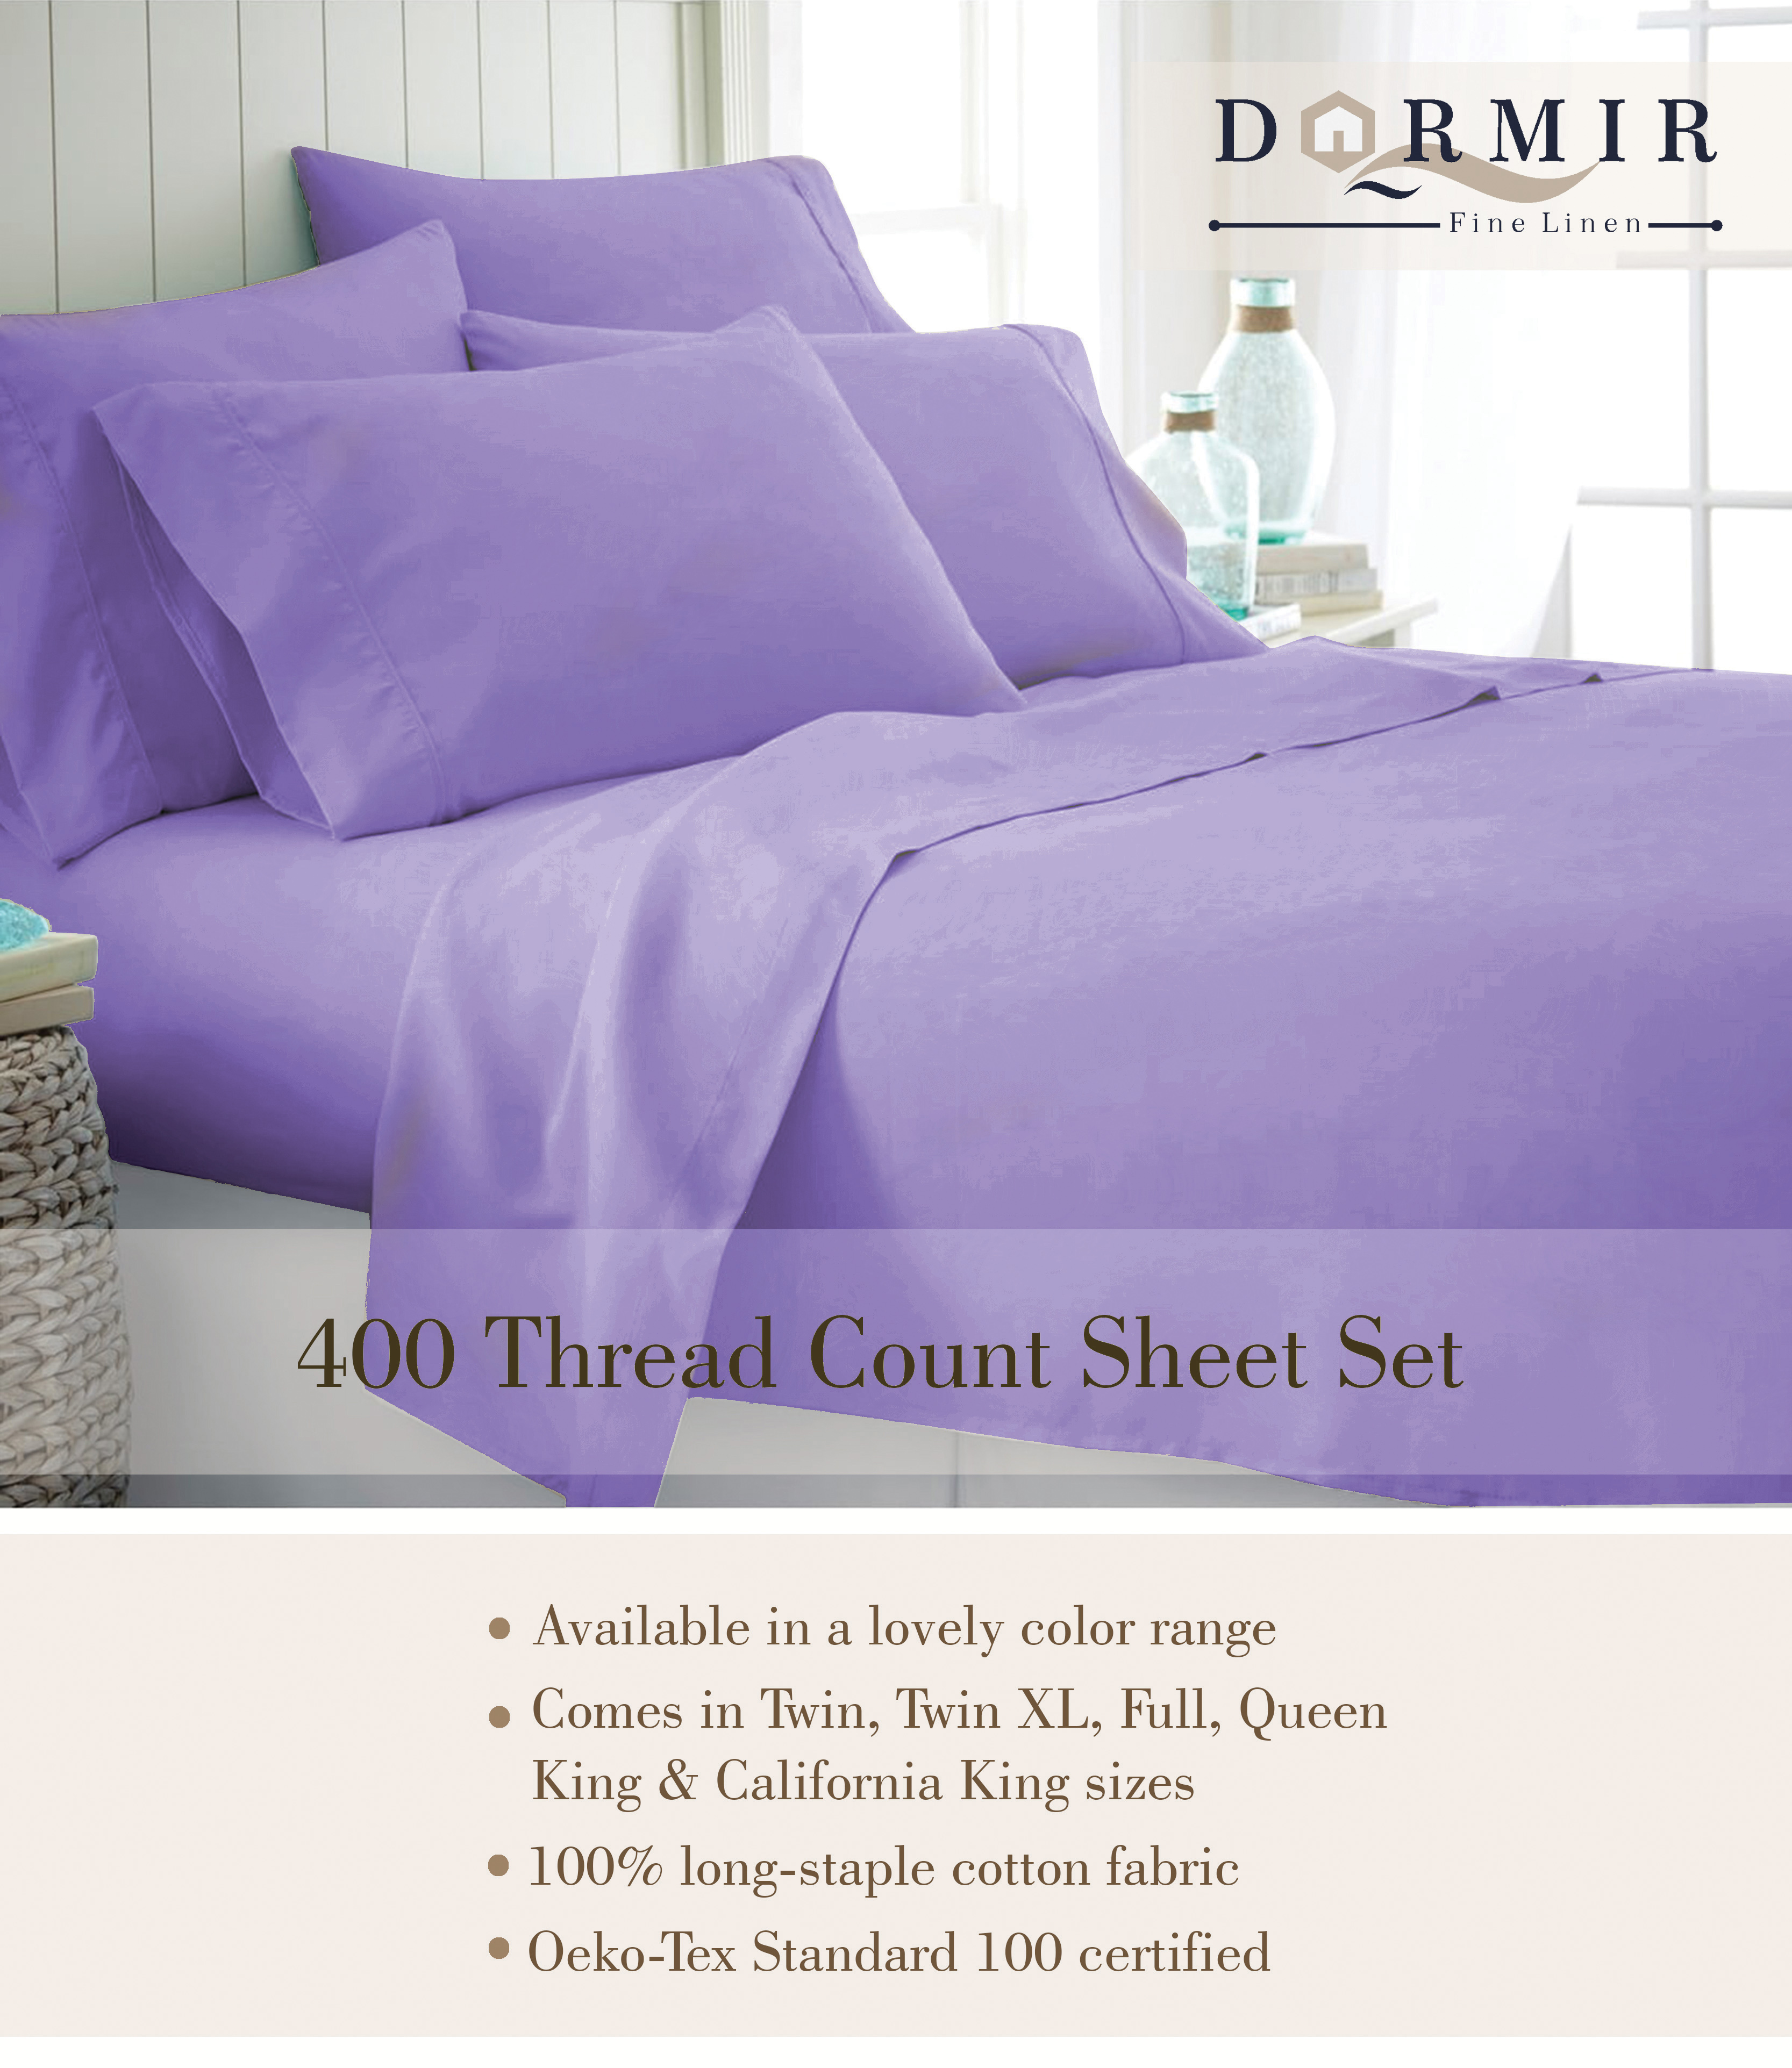 Dormir Queen Sheets Set Cotton Dark Grey 400 Thread Count, 6 Piece